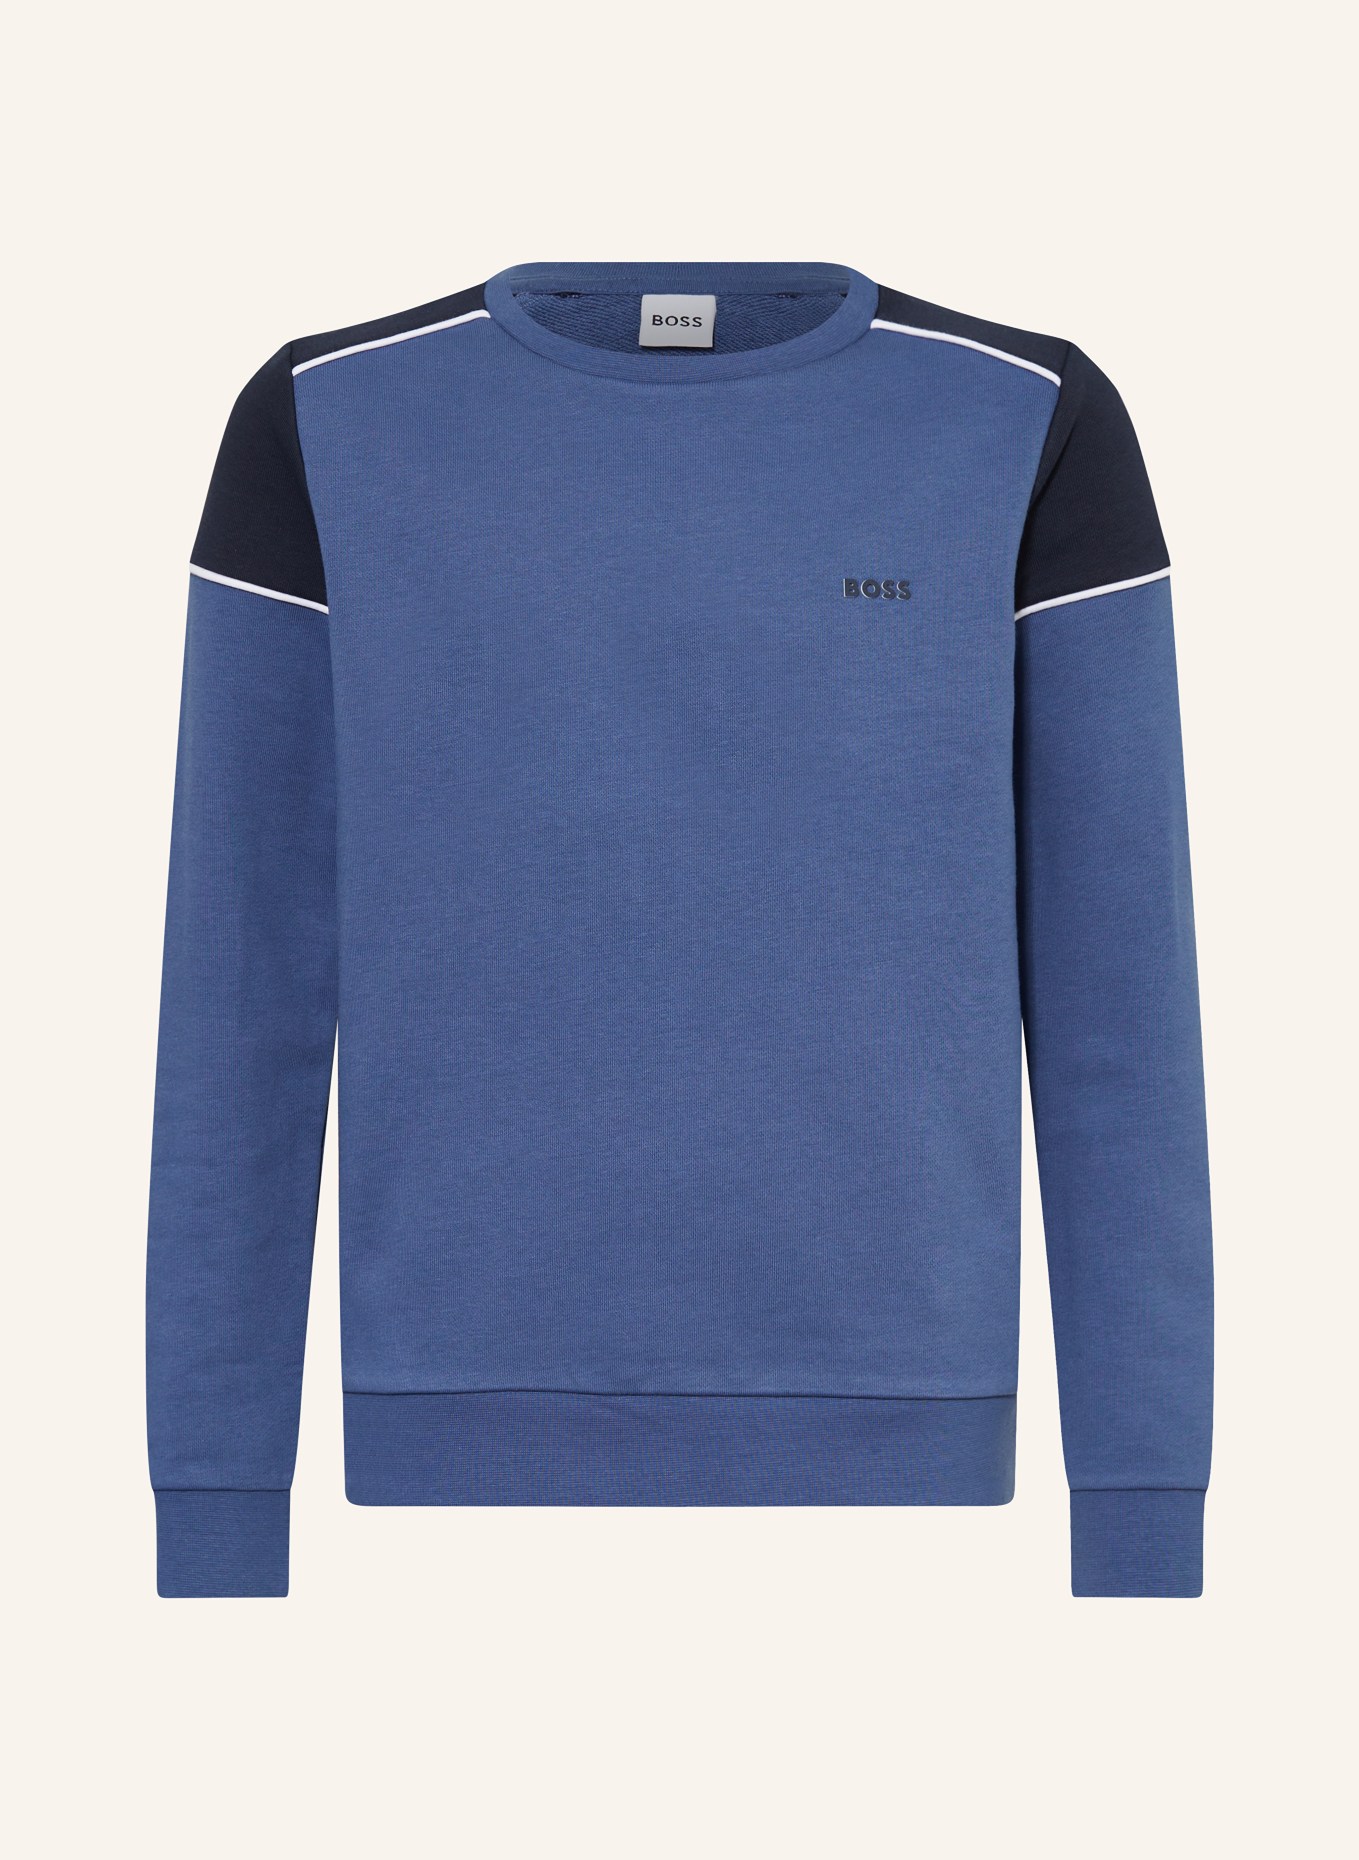 BOSS Sweatshirt, Farbe: BLAU/ DUNKELBLAU (Bild 1)